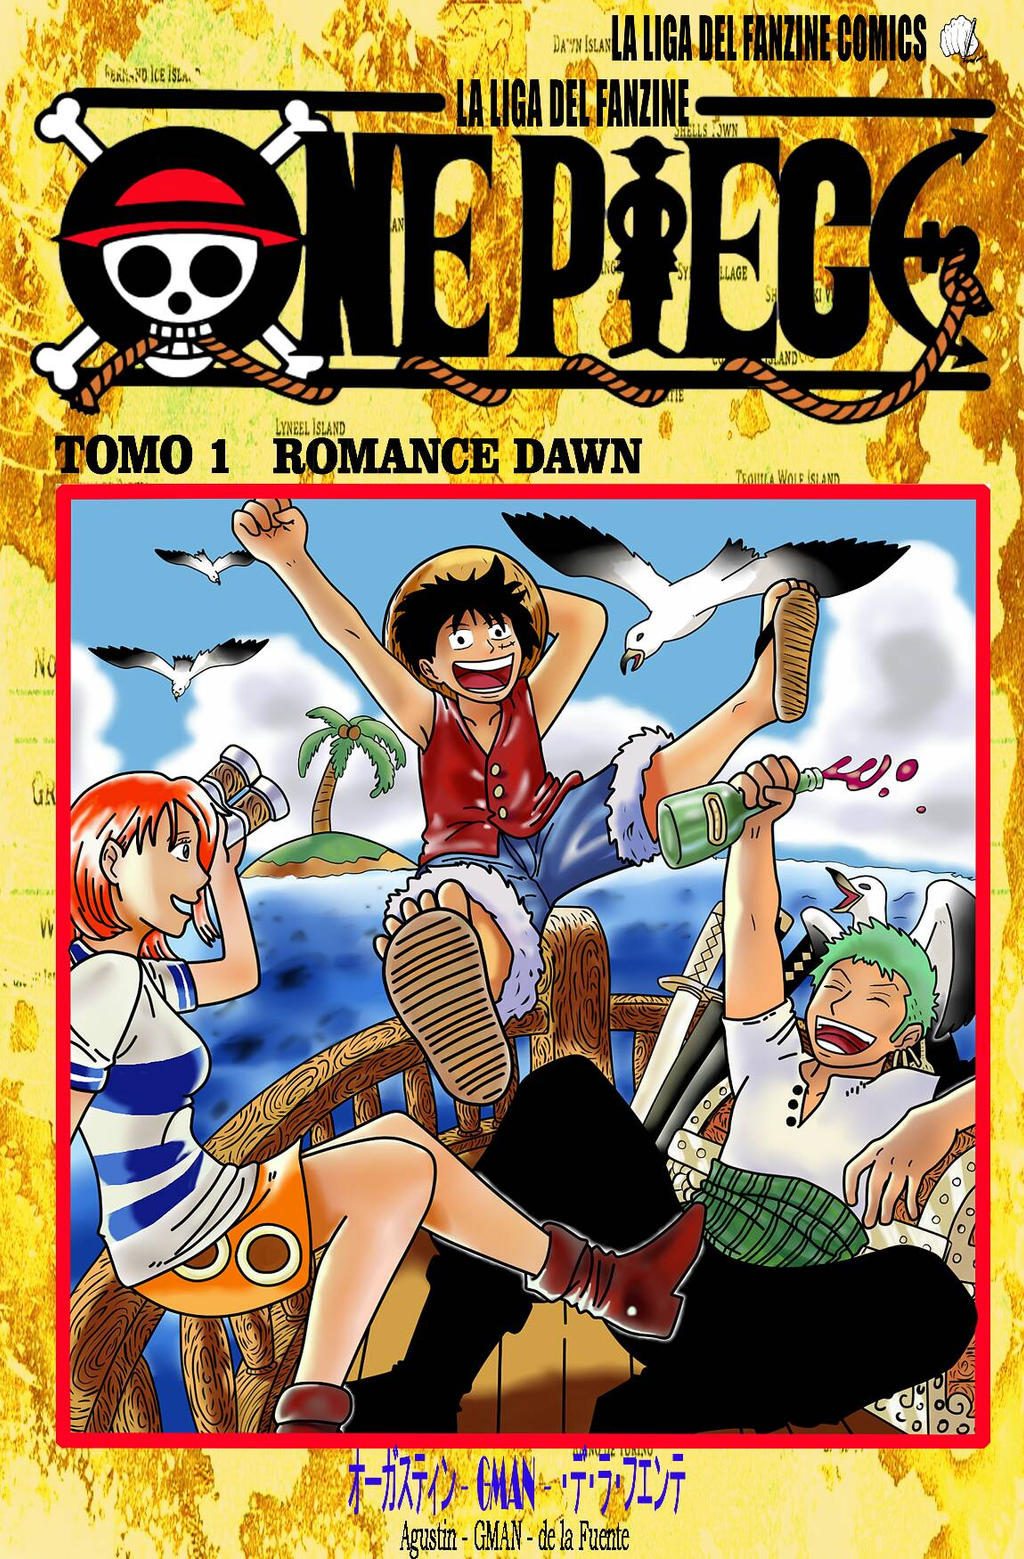 Portada Tomo 1 One Piece by AgusG-man on DeviantArt